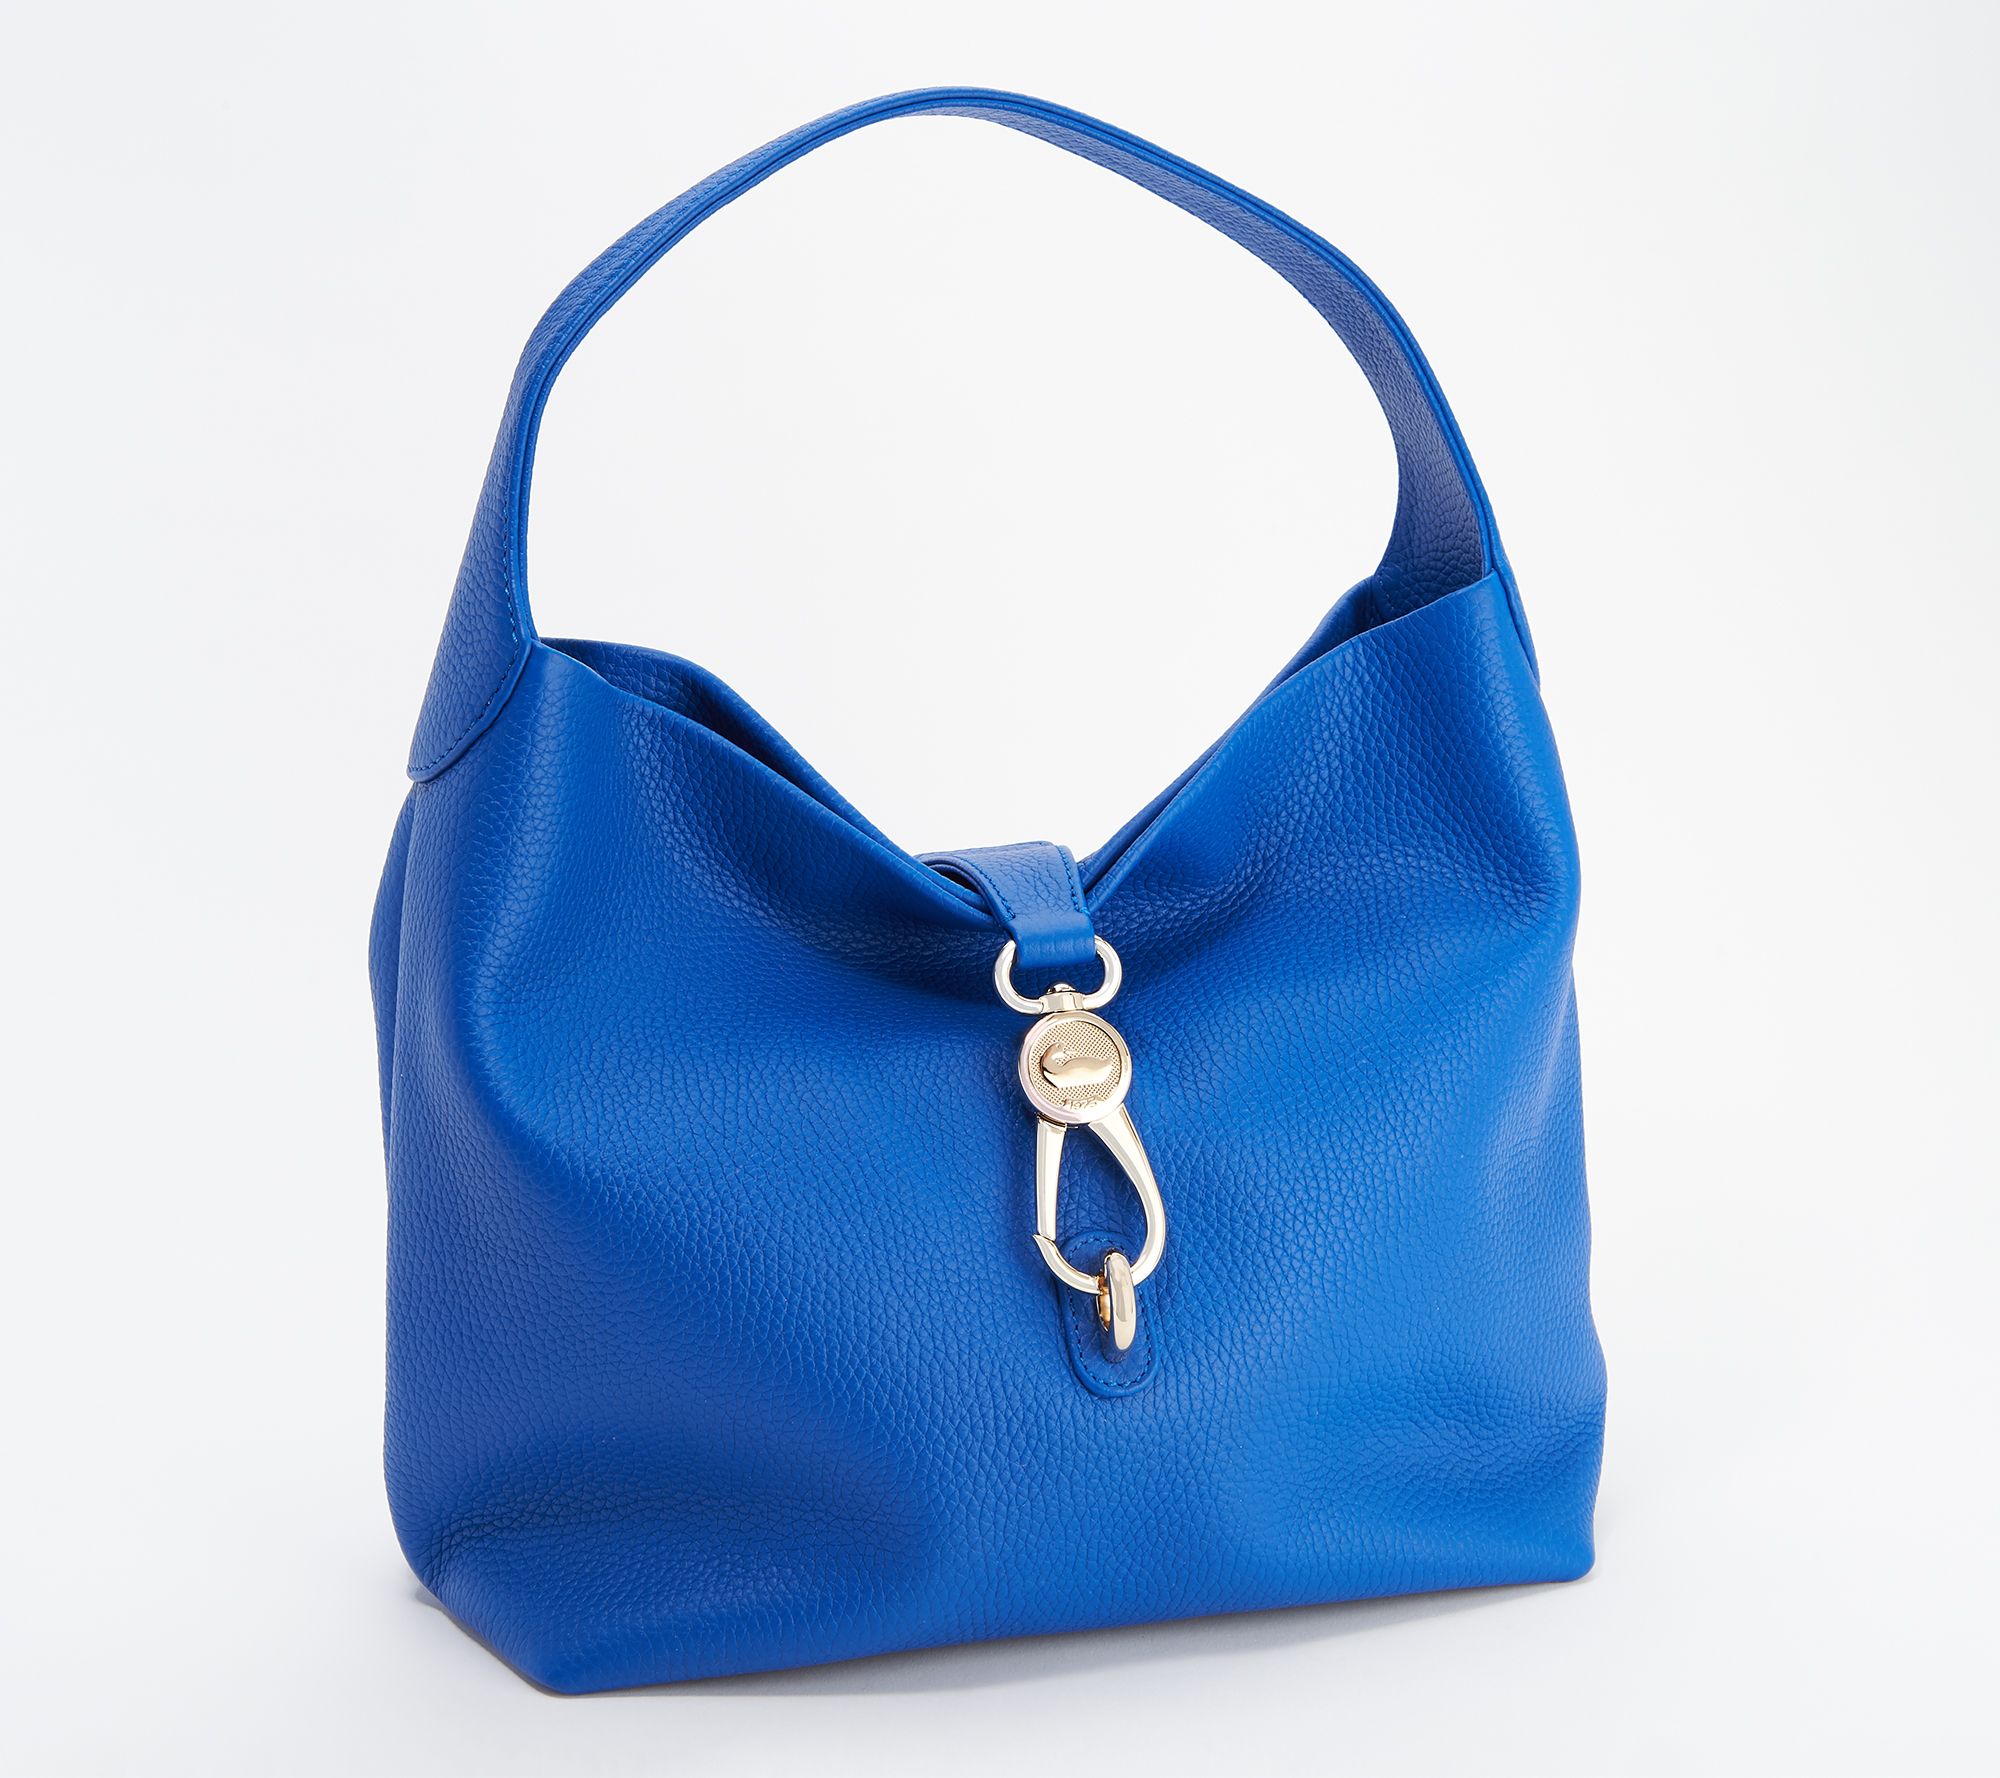 Dooney & Bourke Handbag, Pebble Grain Small Logo Lock Sac Shoulder Bag -  Black: Handbags